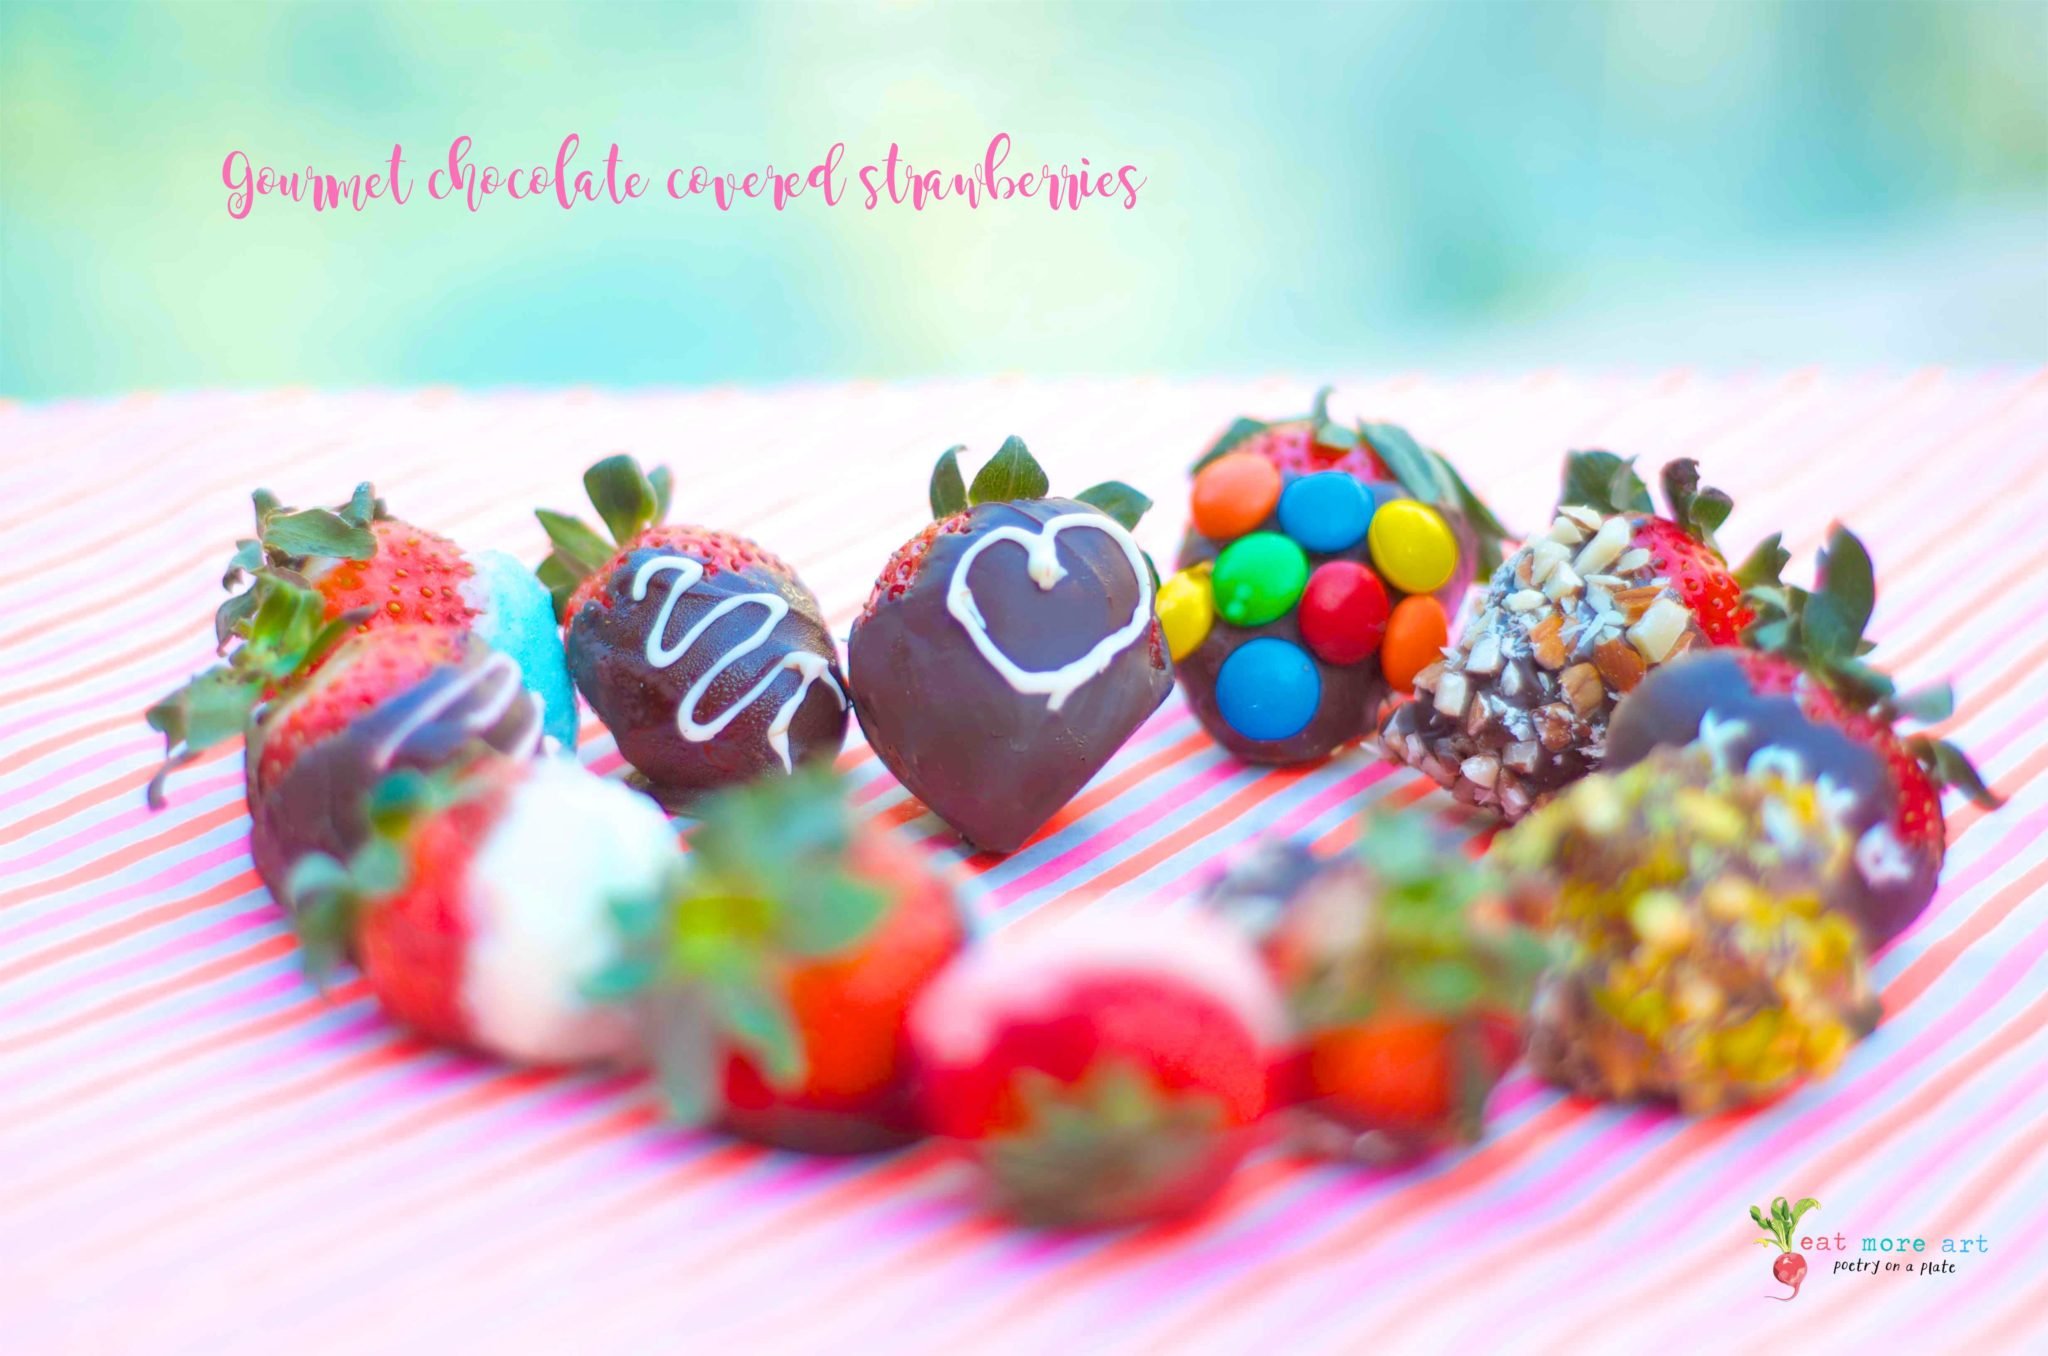 Gourmet Chocolate Covered Strawberries | Eat More Art